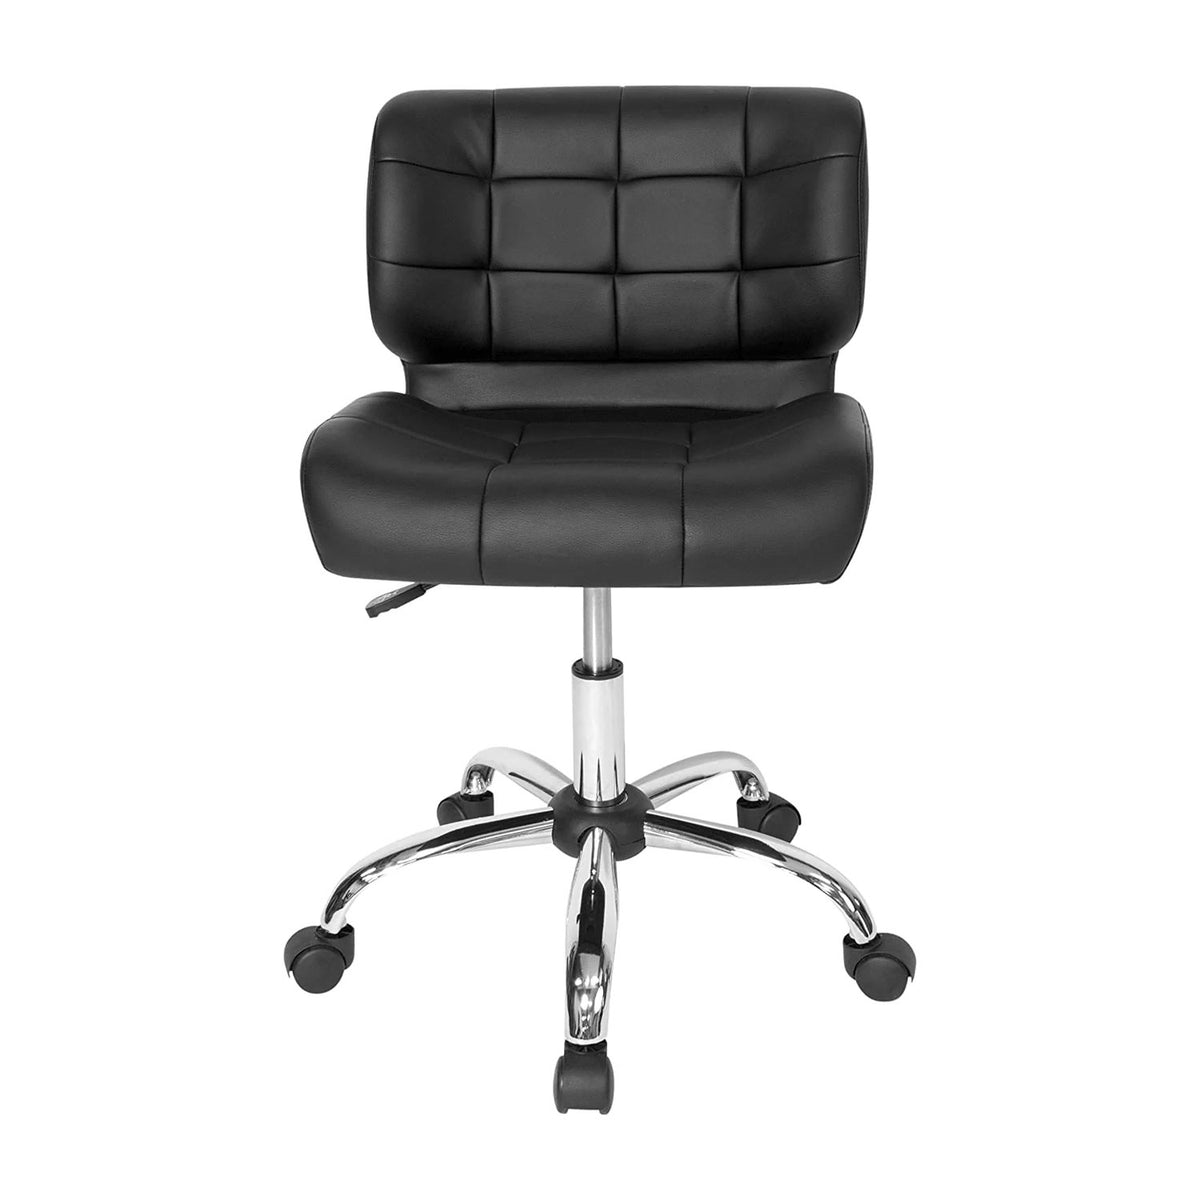 SmileSellers Modern Black Crest Armless Office Chair Swivel Task Chair Desk Chair Computer Chair